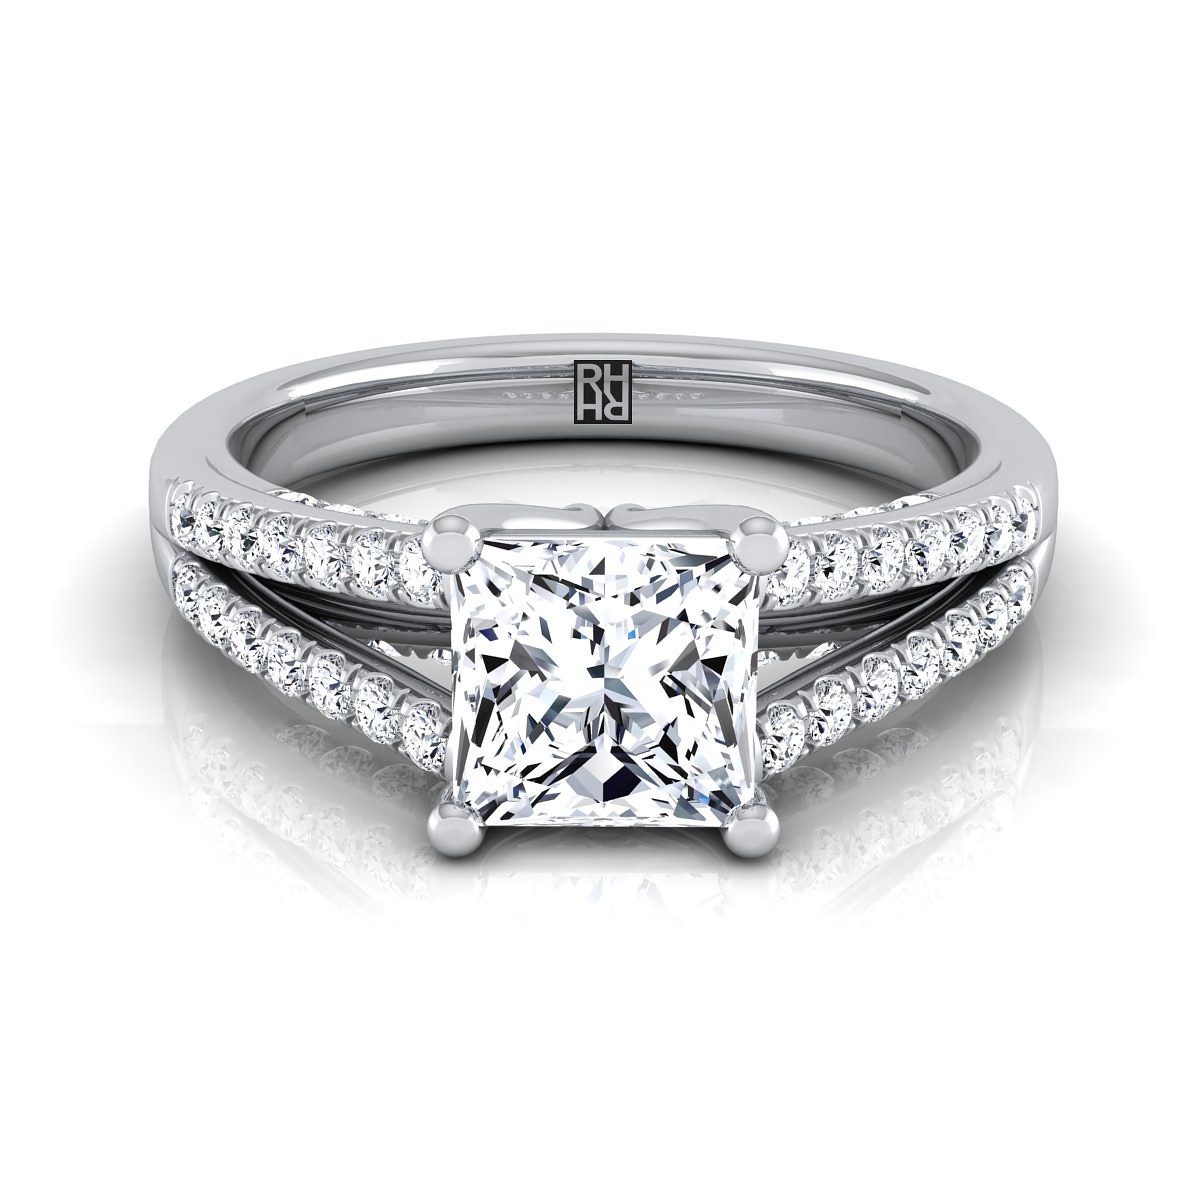 All about a Princess Cut Diamond Engagement Ring Bands – RockHer.com